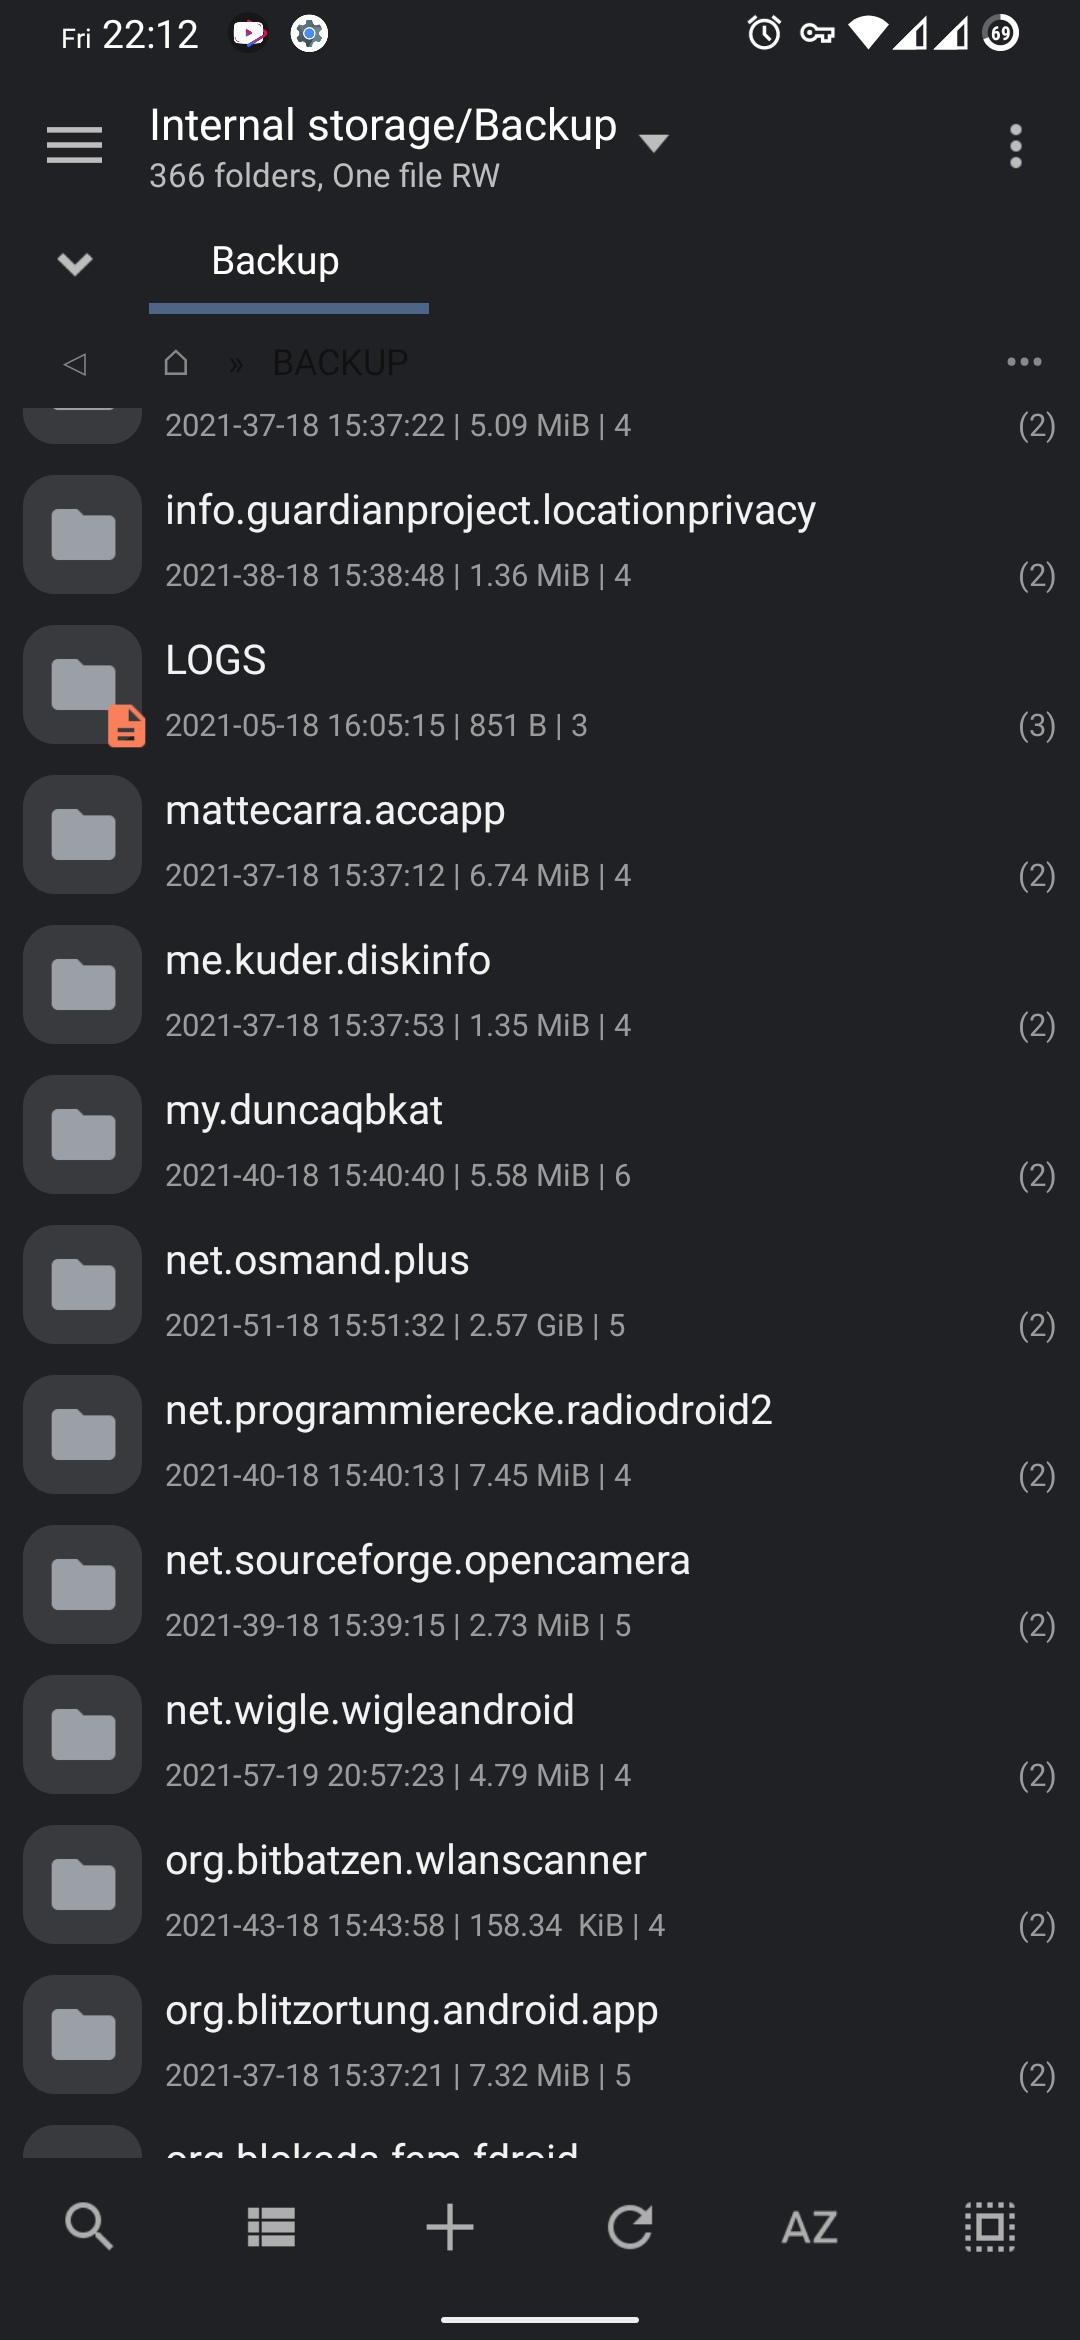 oandbackupx-syncthing-backup-android-phone-files